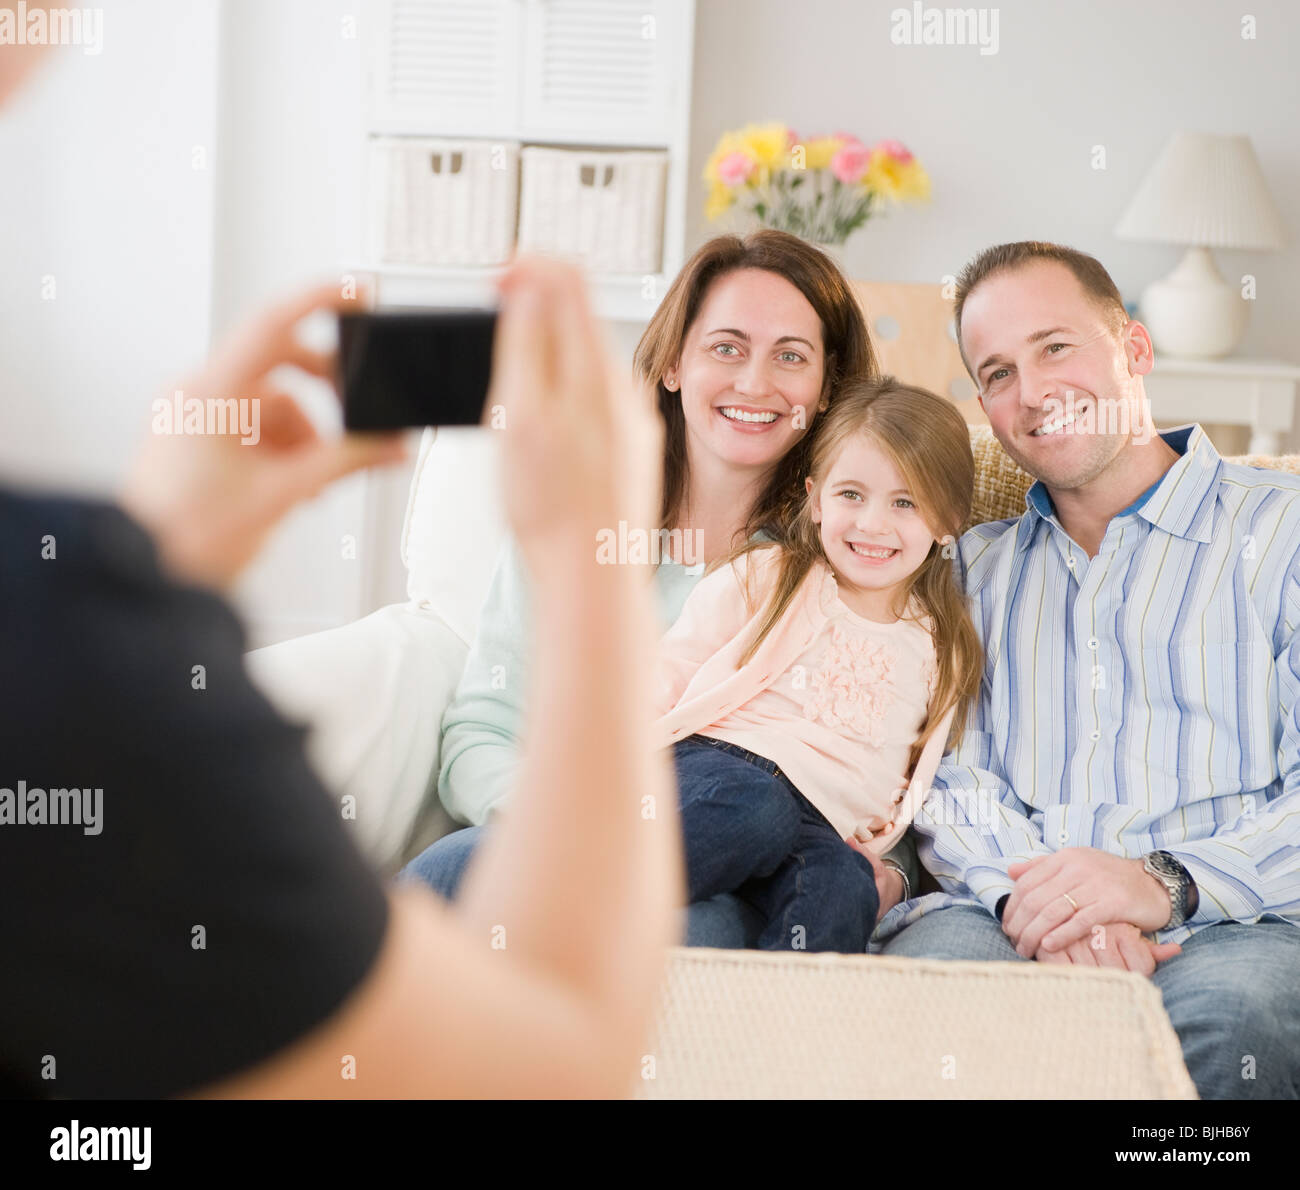 Family photograph Stock Photo